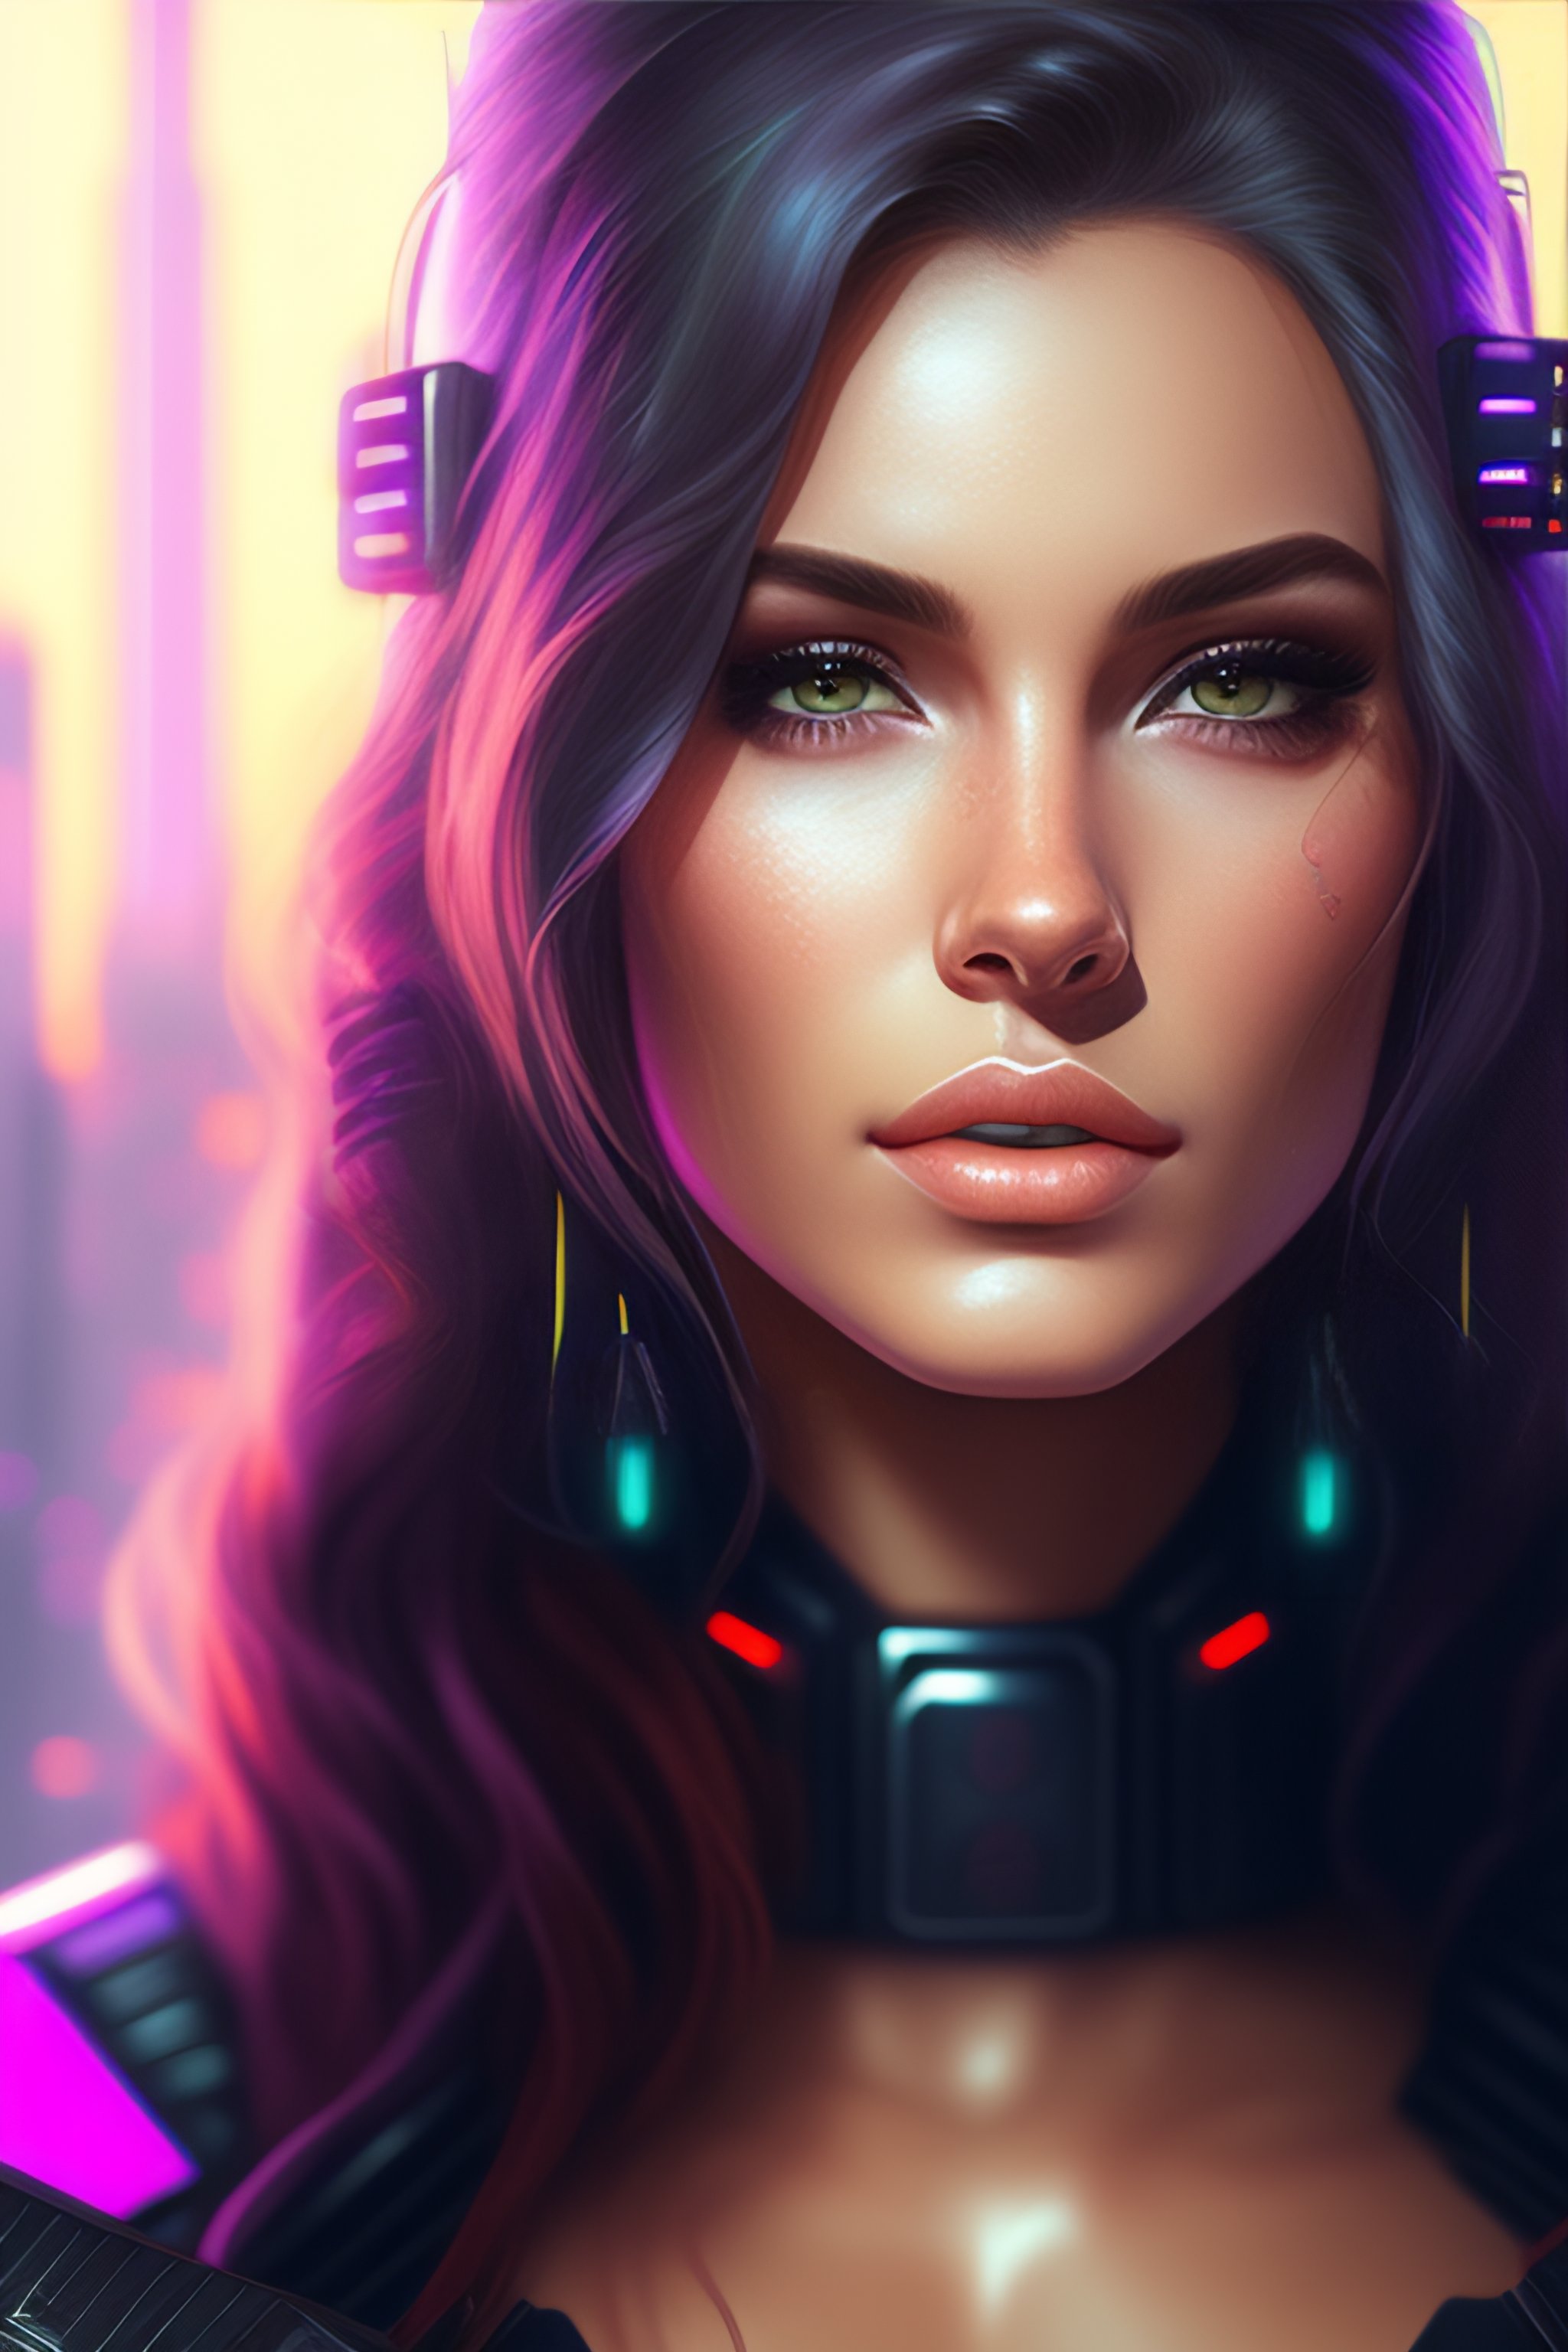 Premium Photo  A fictional portrait of a scifi cyberpunk girl